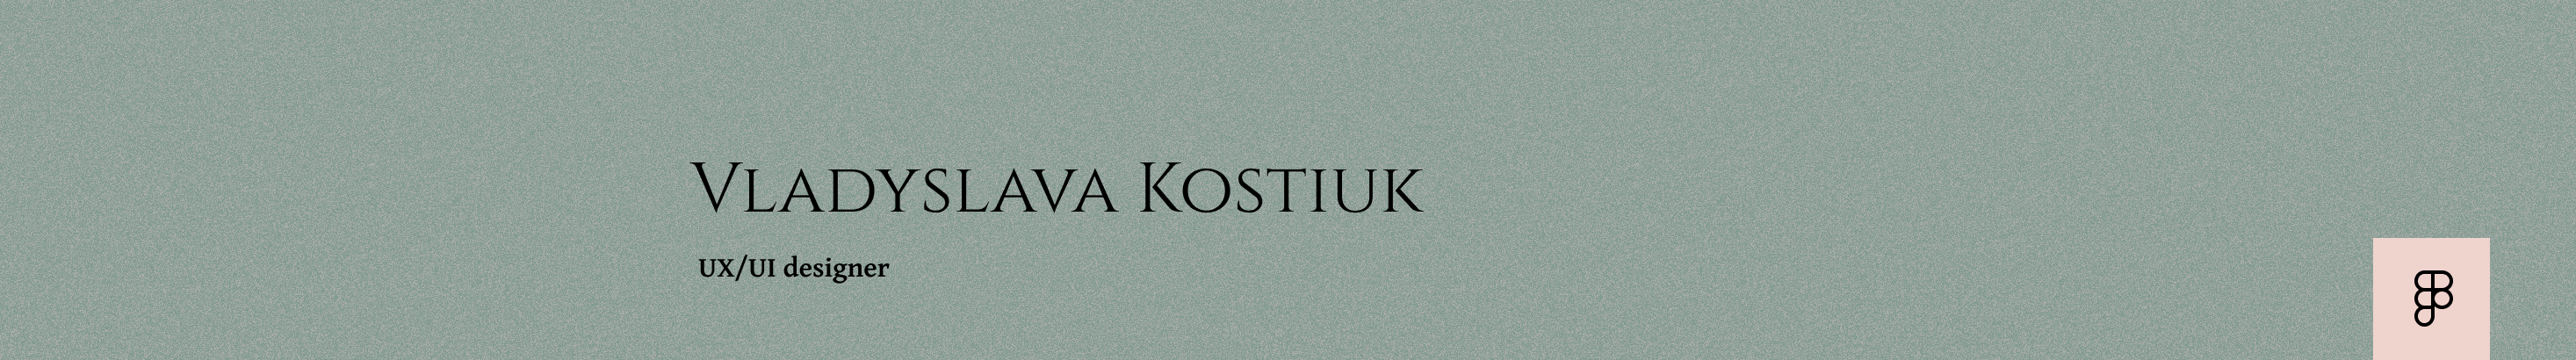 Vladyslava Kostiuk's profile banner